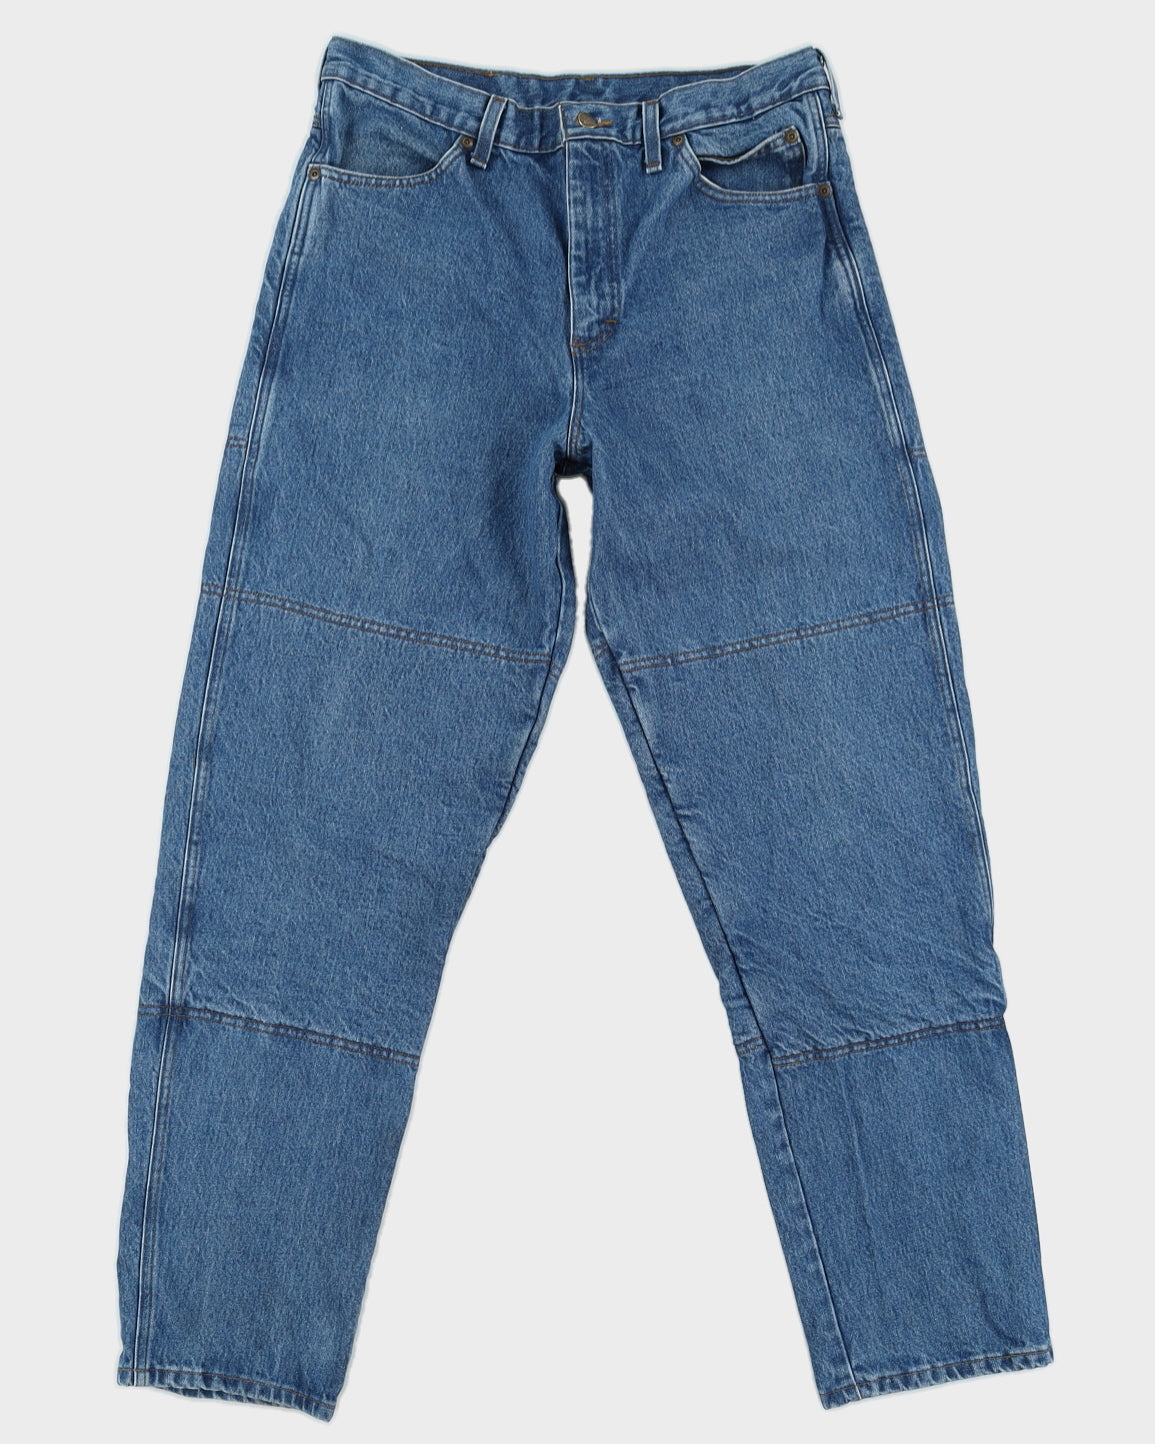 Vintage 90s Draggin Jeans Medium Wash - W34 L32